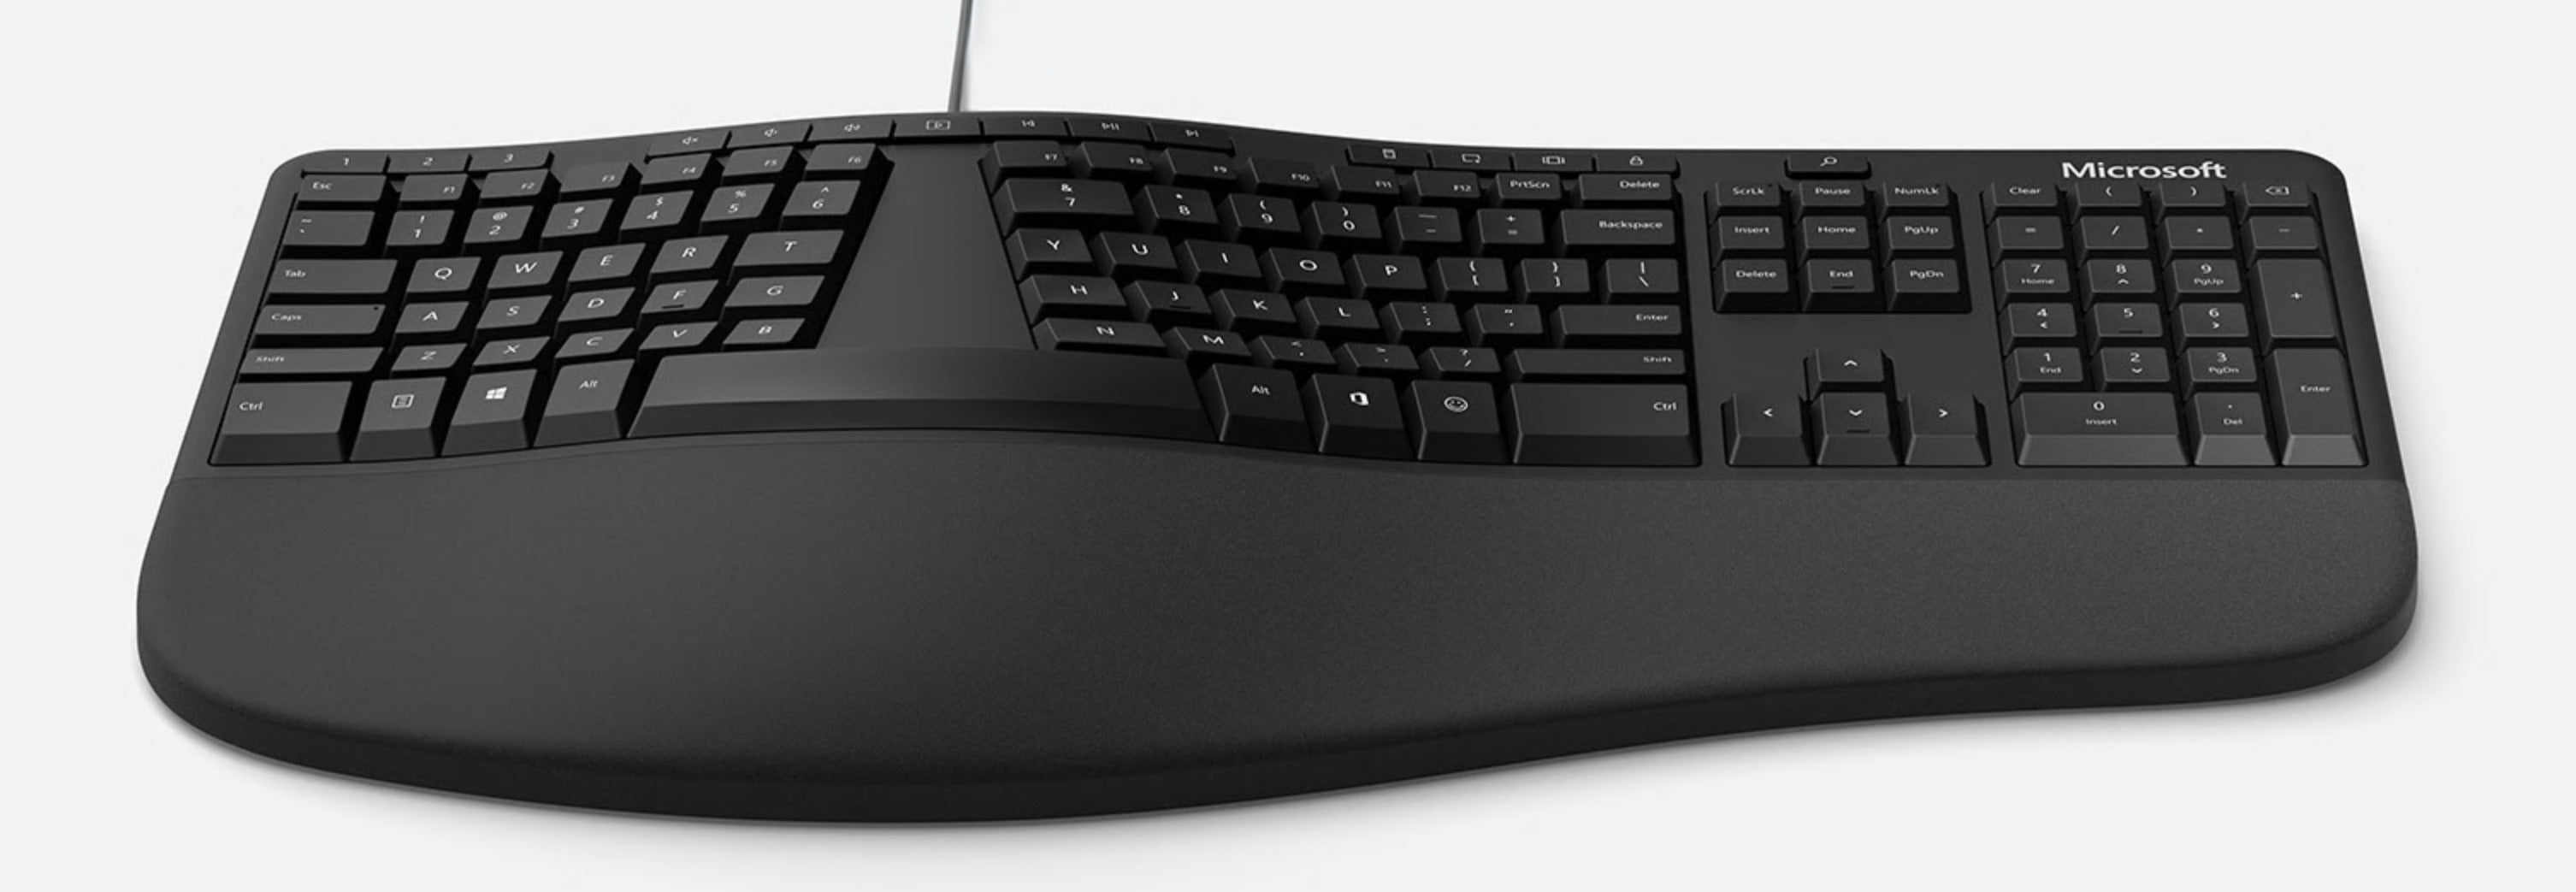 Microsoft keyboards will include dedicated Office, emoji